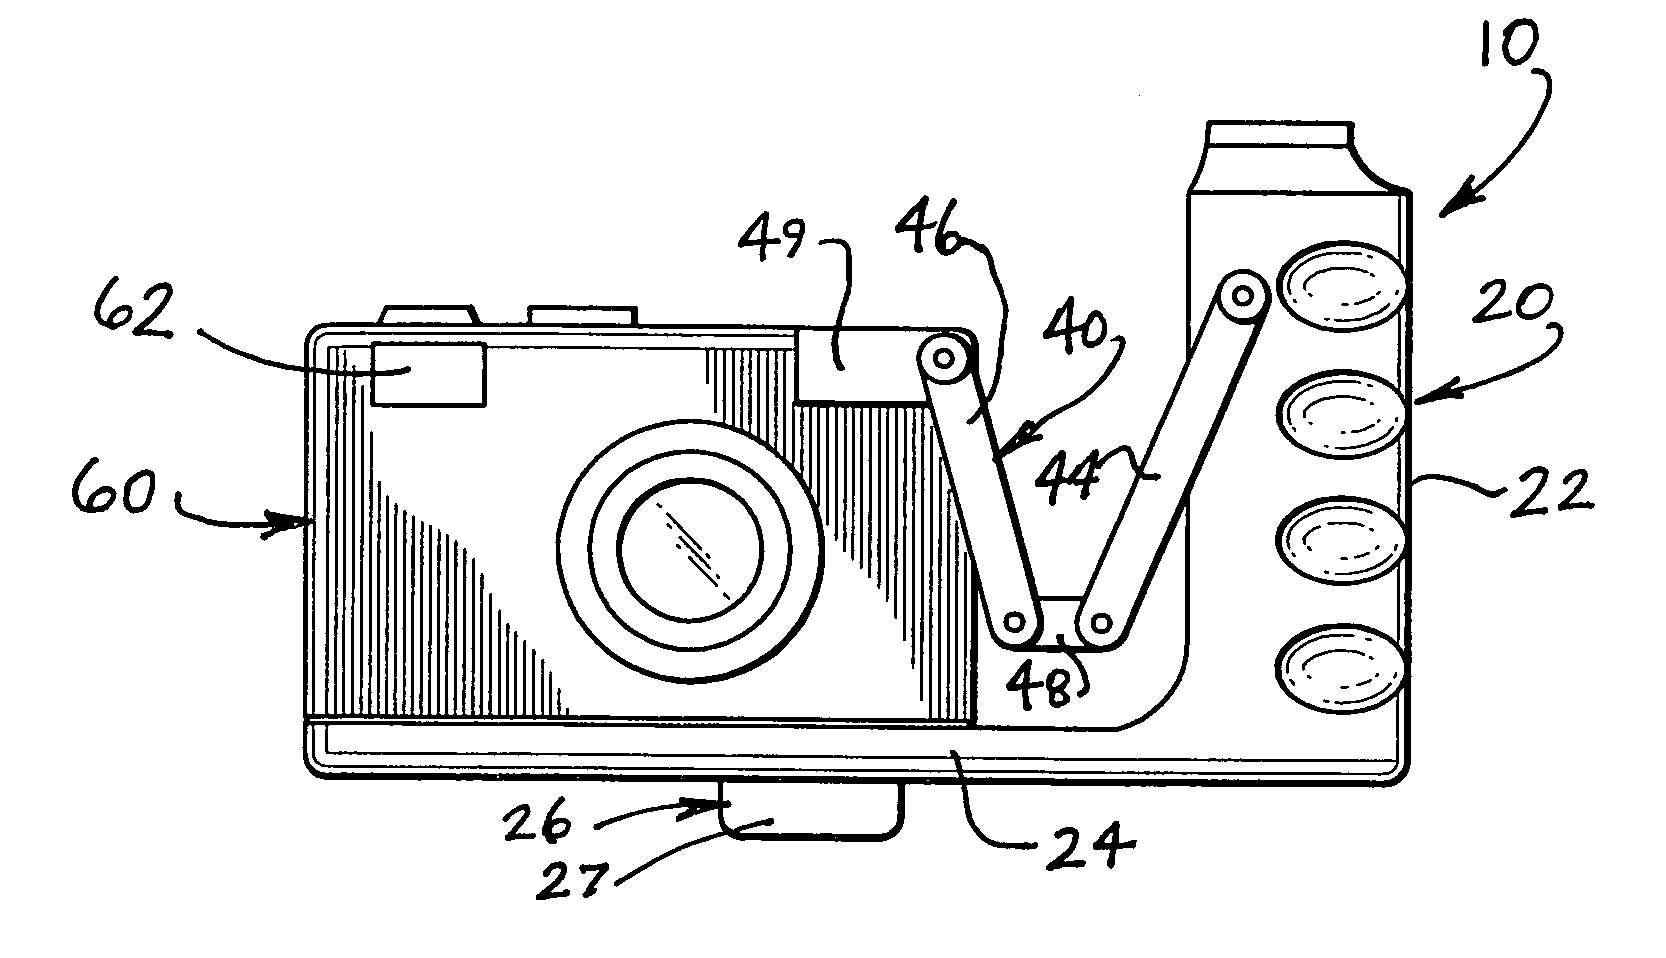 Wireless camera flash trigger device